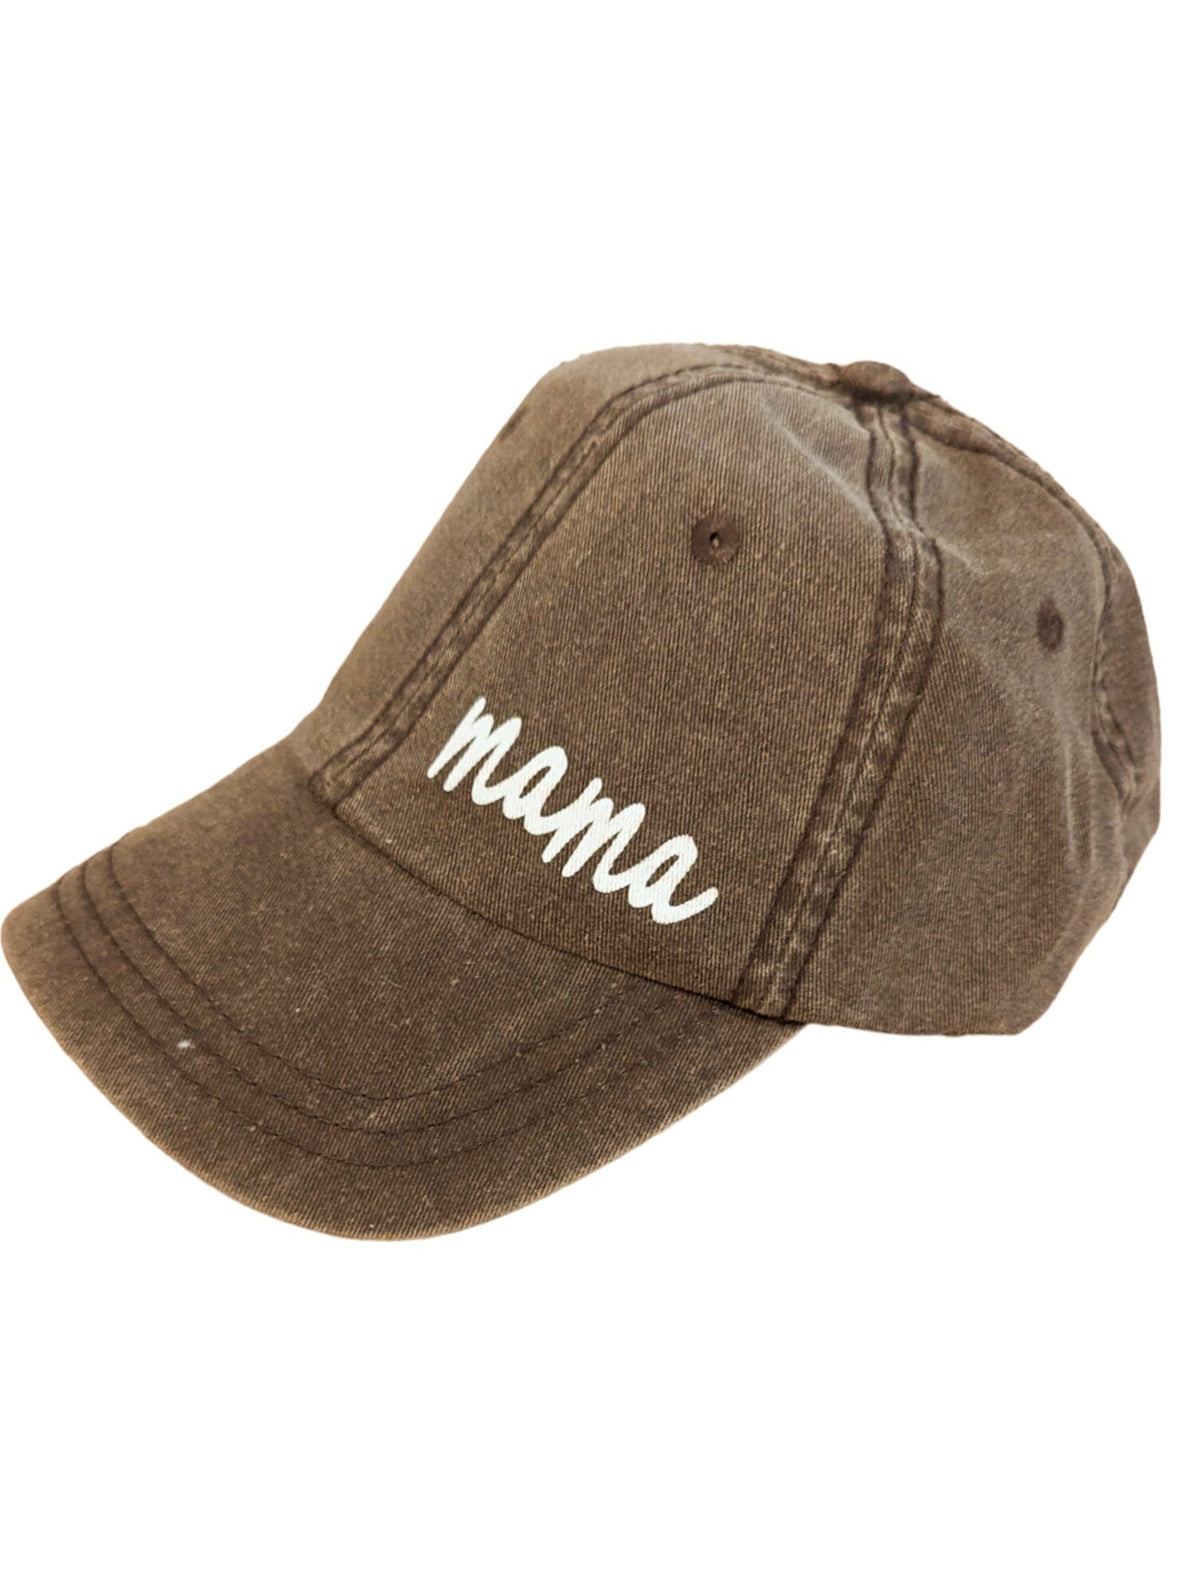 Chocolate Mama Hat